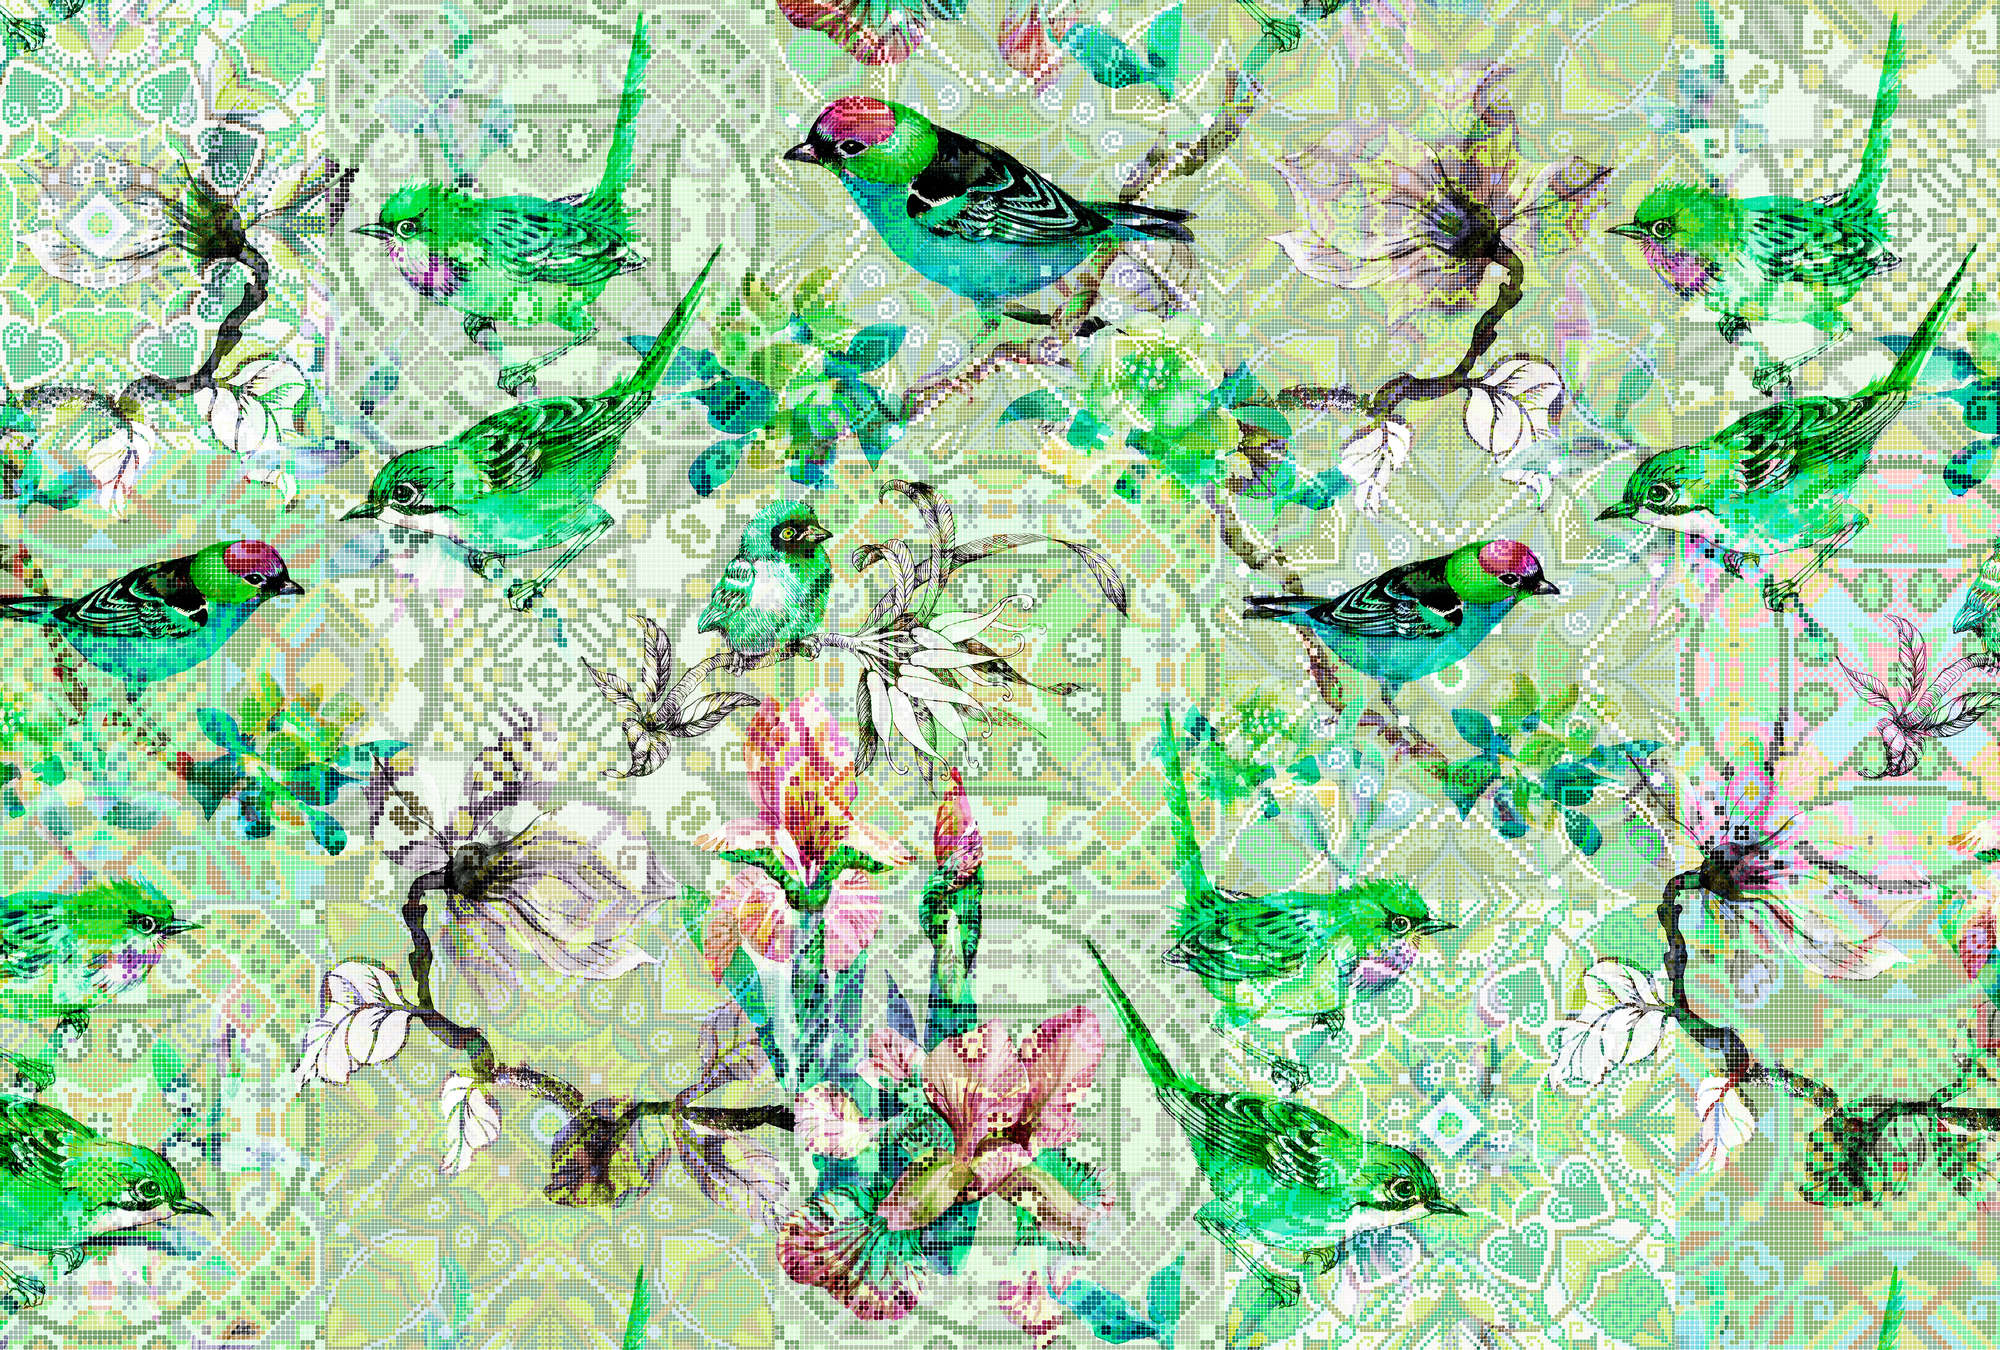             Vogel Fototapete Grün mit Mosaik Muster – Grün, Rosa
        